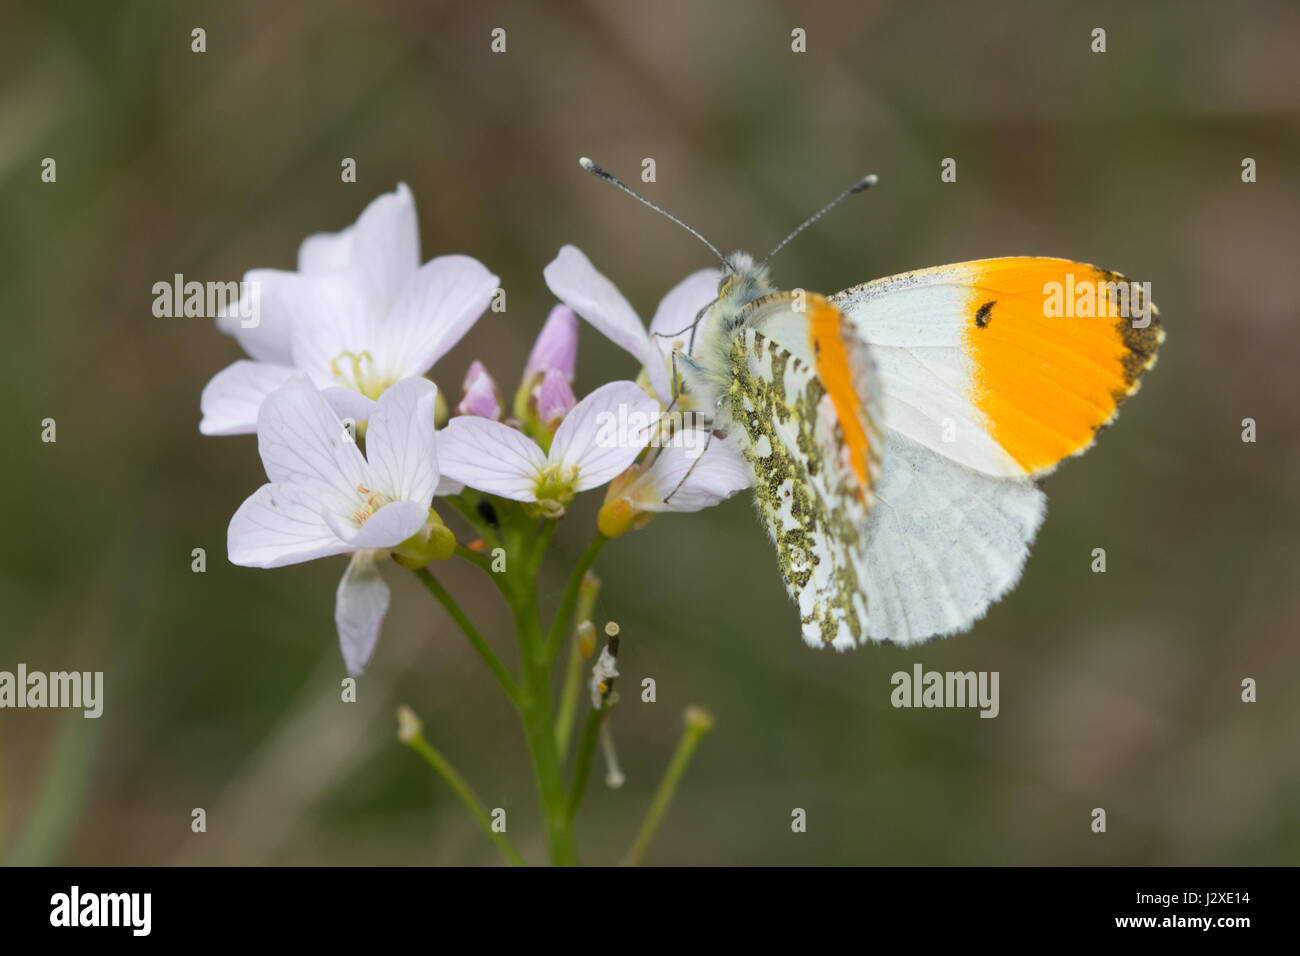 Arancio maschio-punta butterfly (Anthocharis cardamines) nectaring su cuckooflower (noto anche come lady's smock, cardamine pratensis) Foto Stock